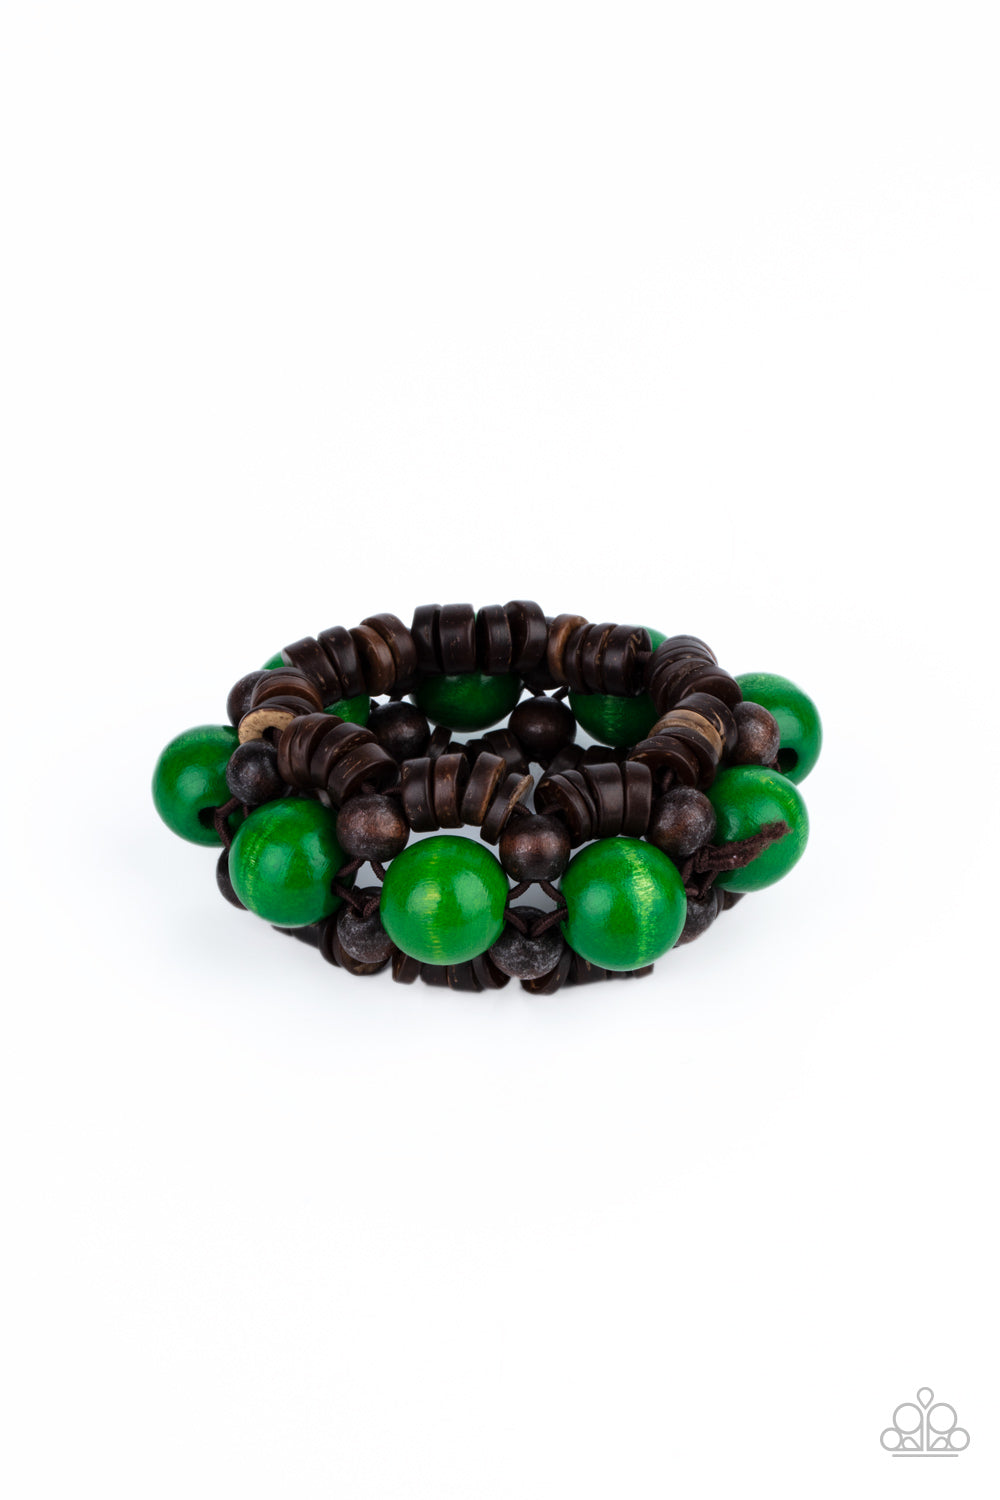 Paparazzi Accessories - Tropical Temptations #B475 - Green Bracelet